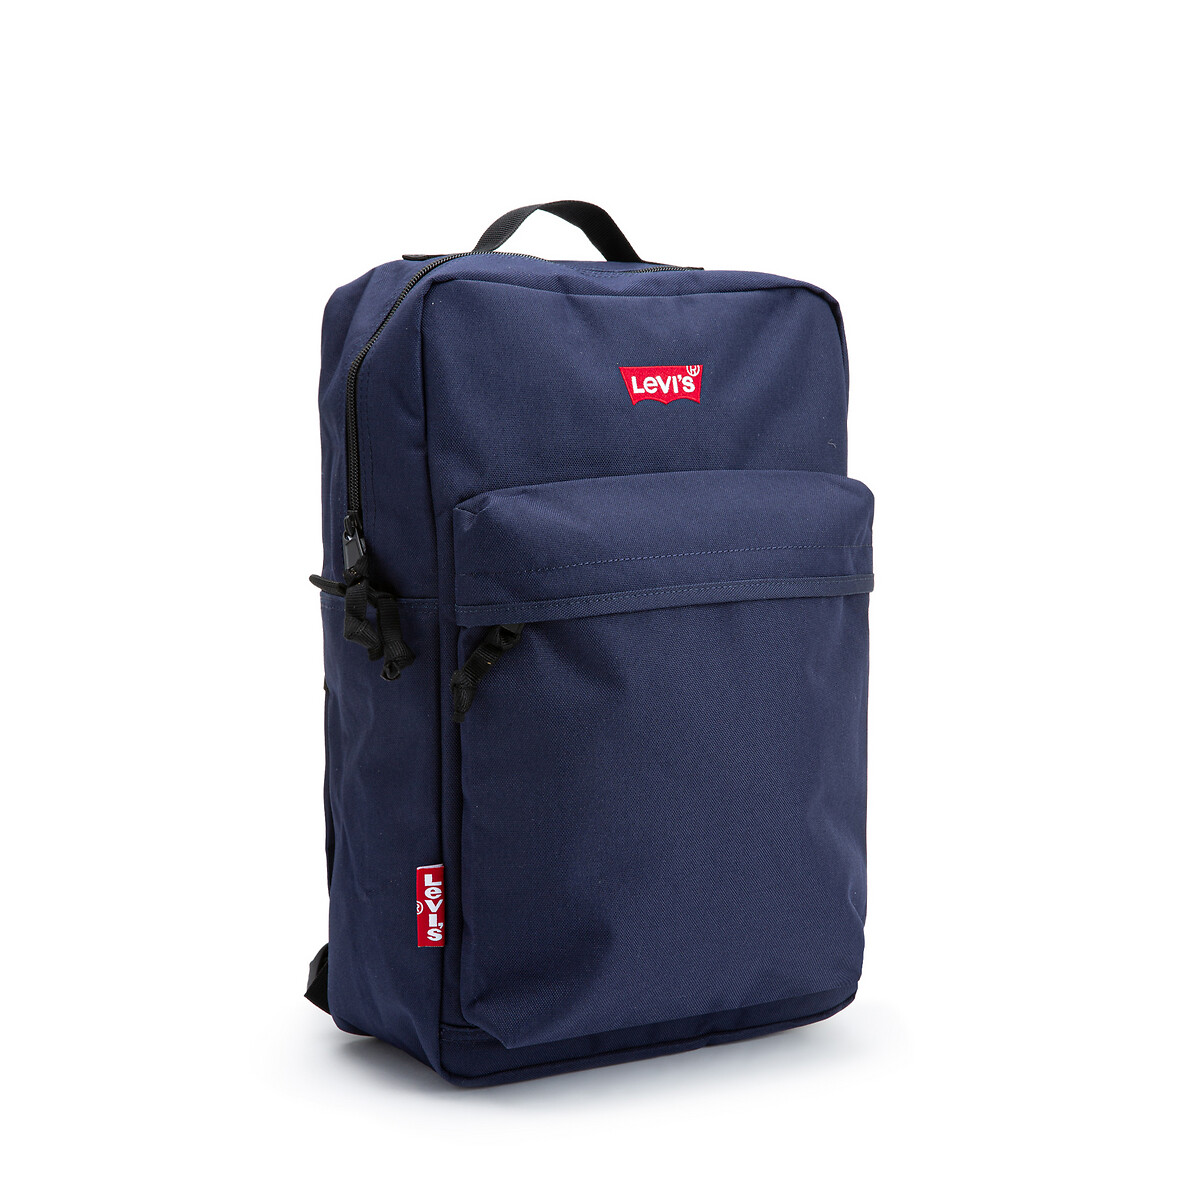 L pack backpack navy blue Levi's | La Redoute